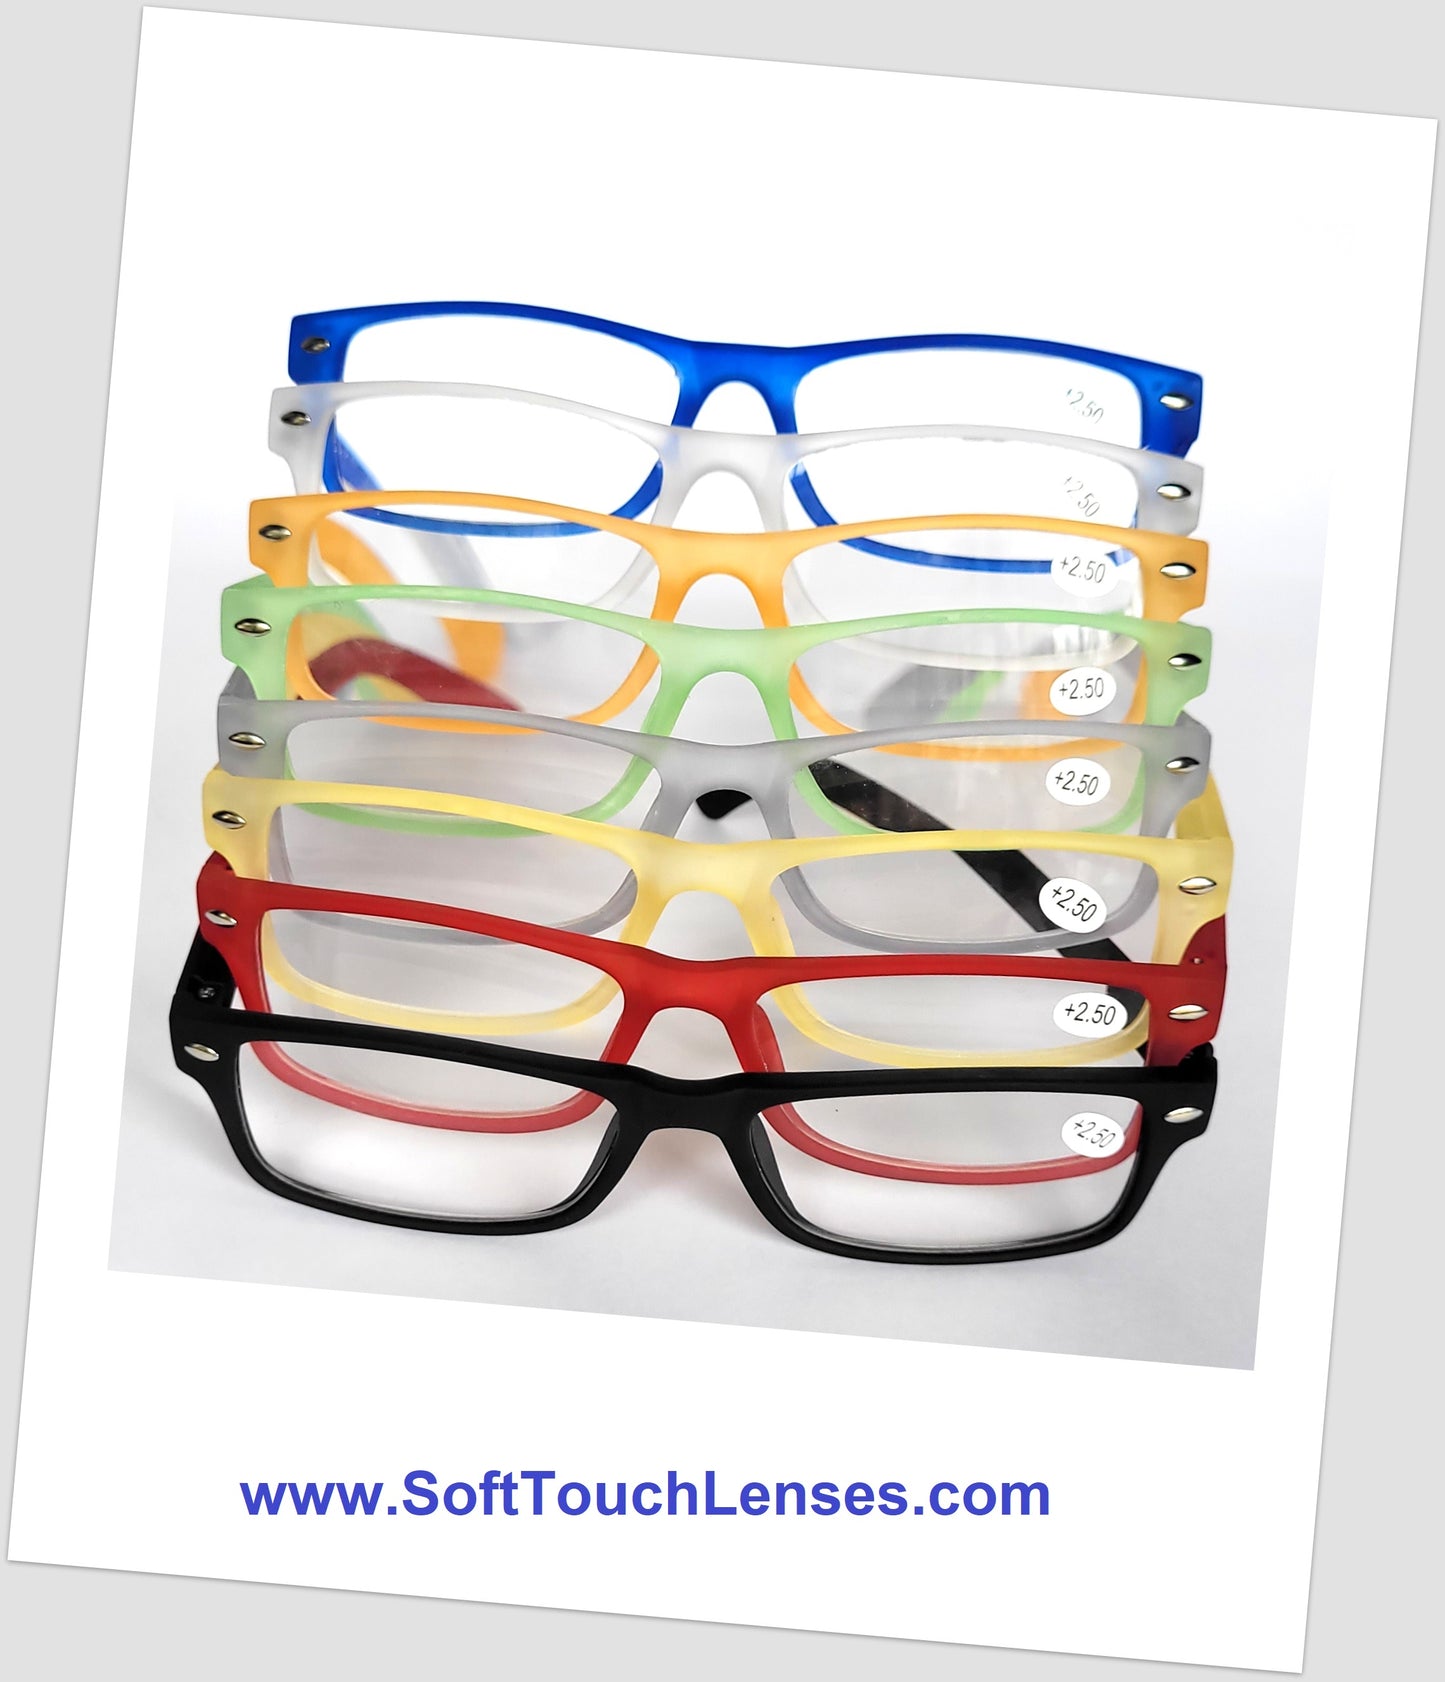 Affaires Red Reading Glasses For Men & Women Innovative Scratch Resistant UV Blocking Lenses , vibrant colorsful Design Power Reading Eyeglasses